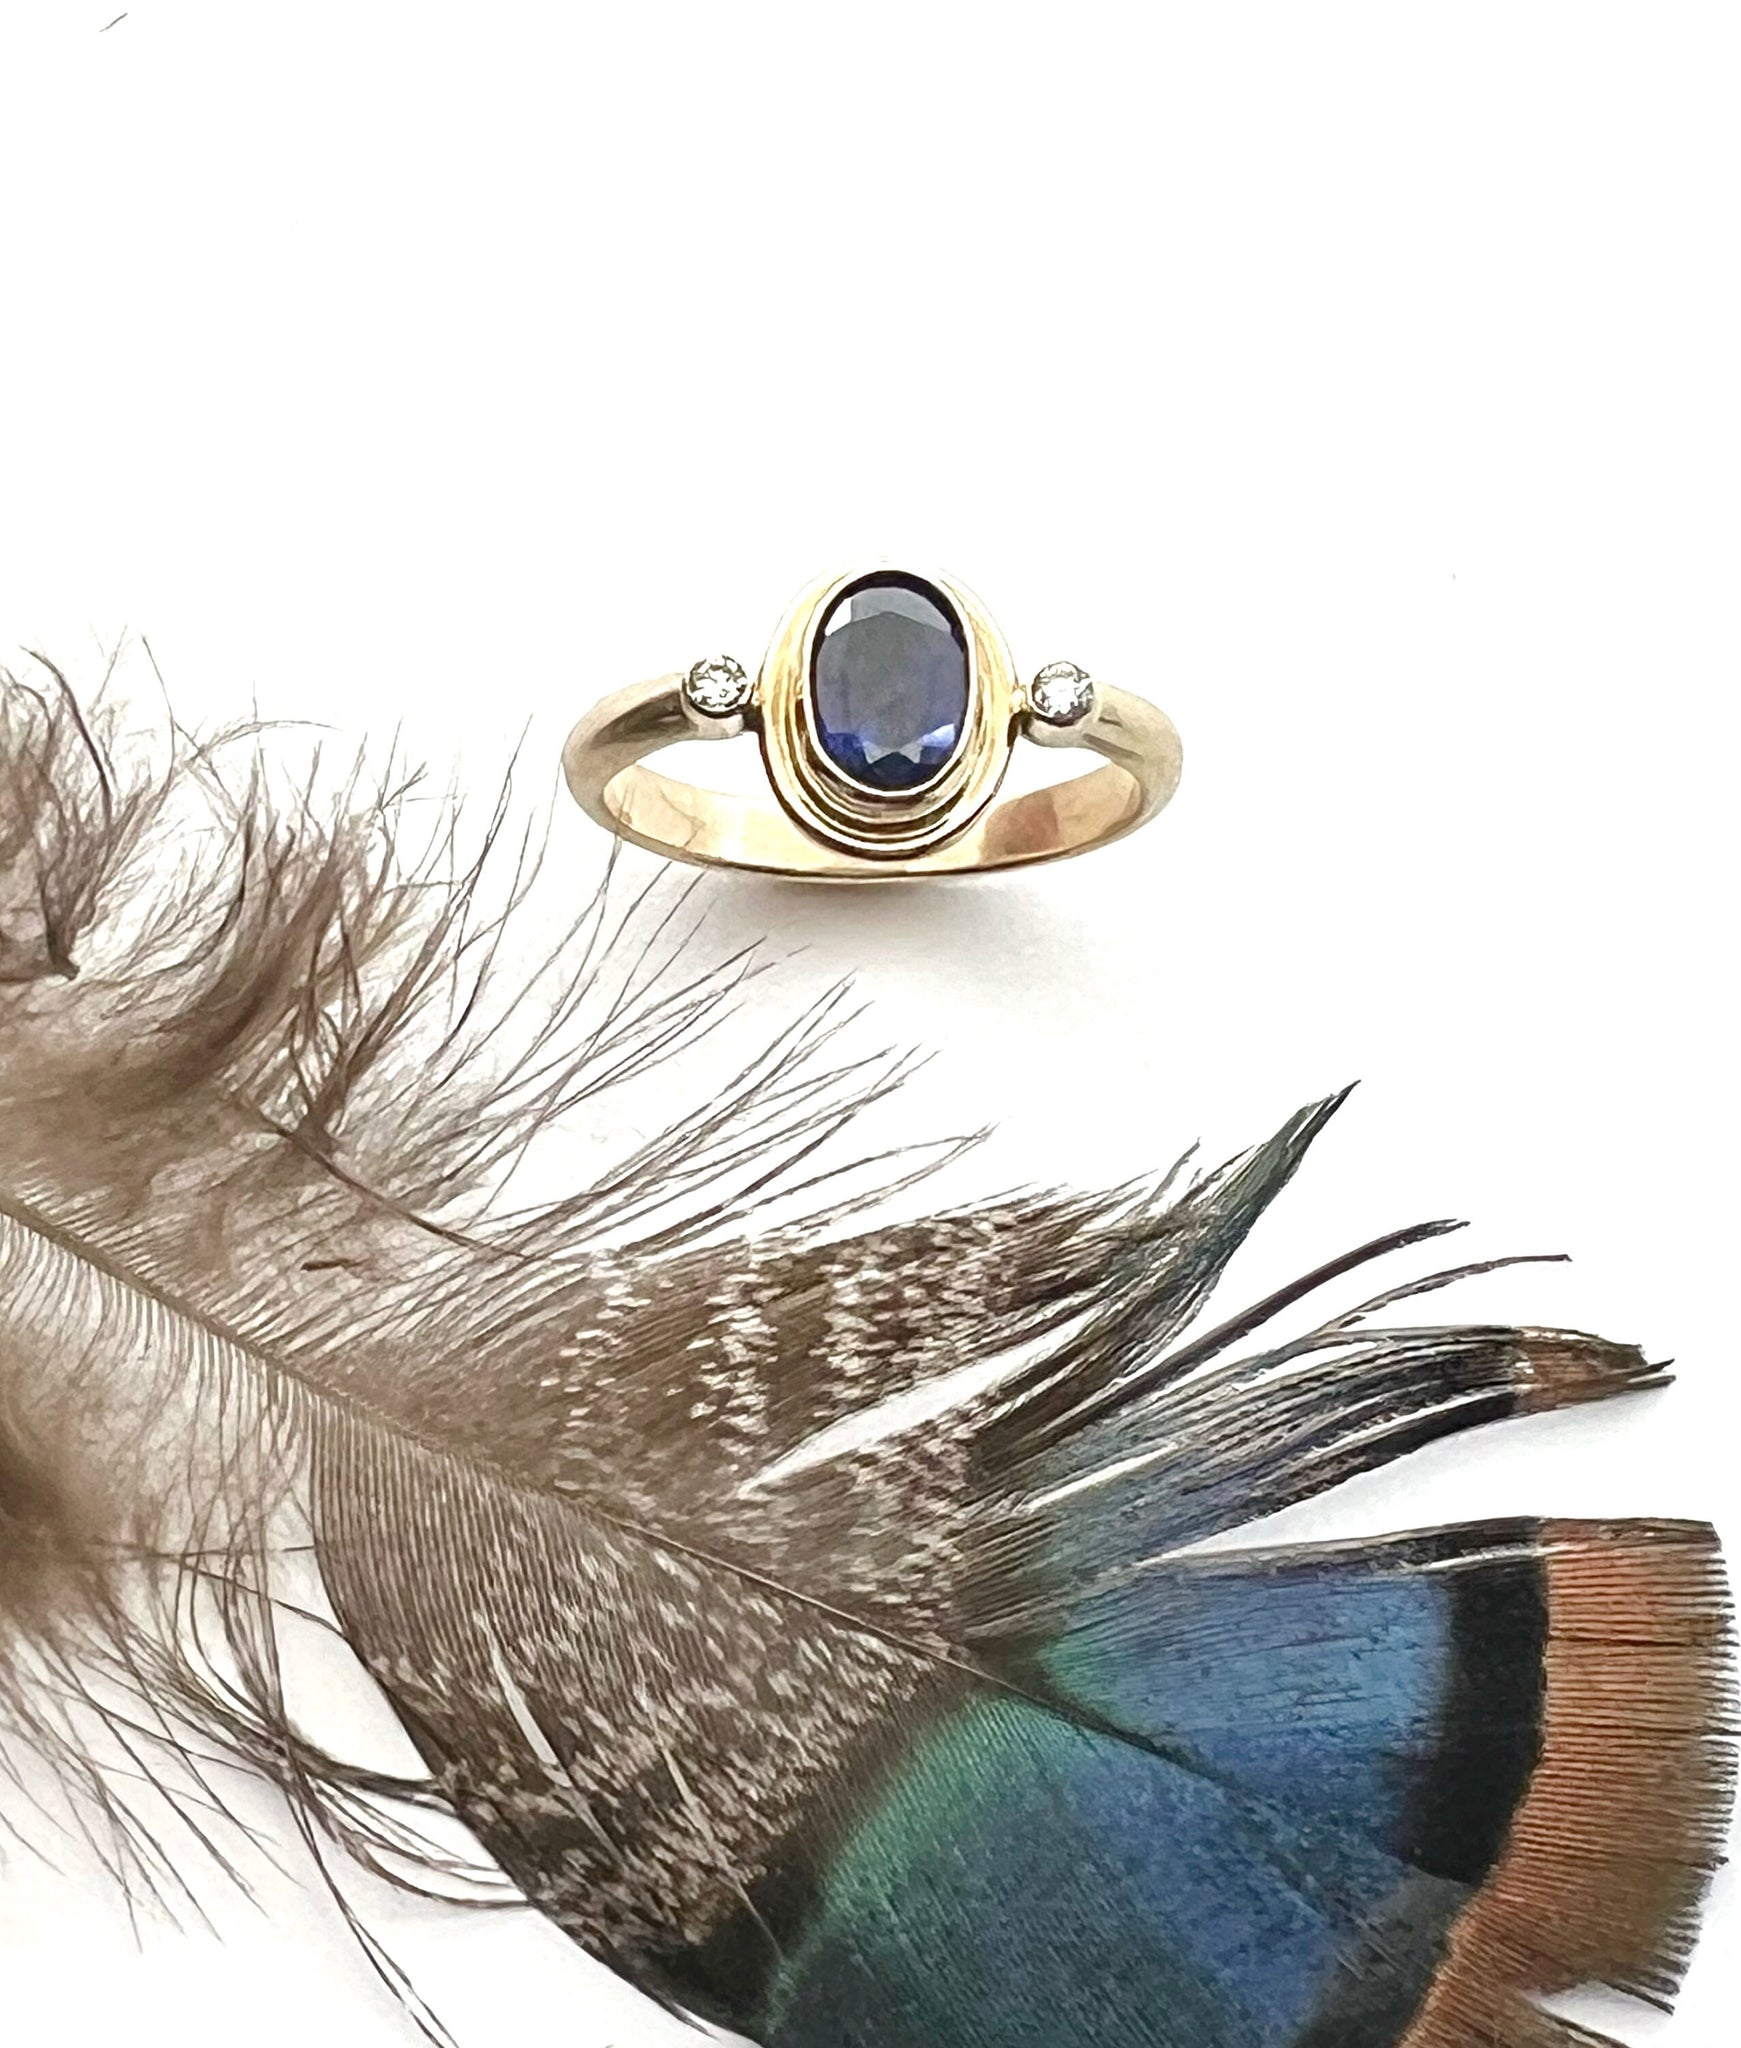 Sapphire and Diamond Ring In 14k Gold, September Birthstone Ring, Alternate Engagement ring, Friendship Ring